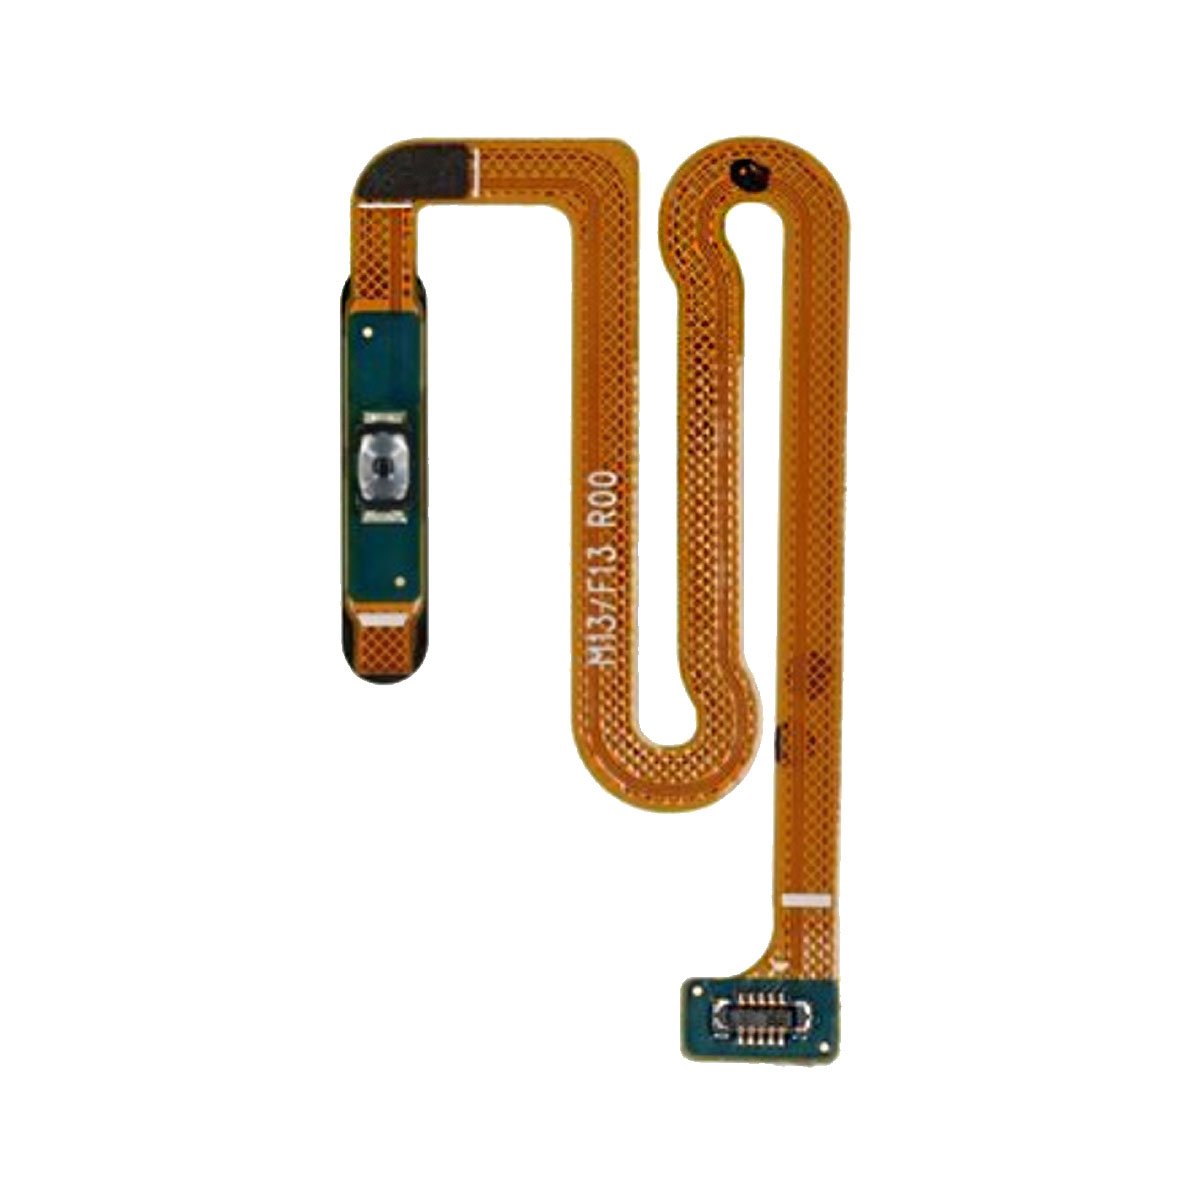 Samsung SM-M135F Galaxy M13 4G Fingerprint Sensor Flex Cable - GH96-15216B - Orange